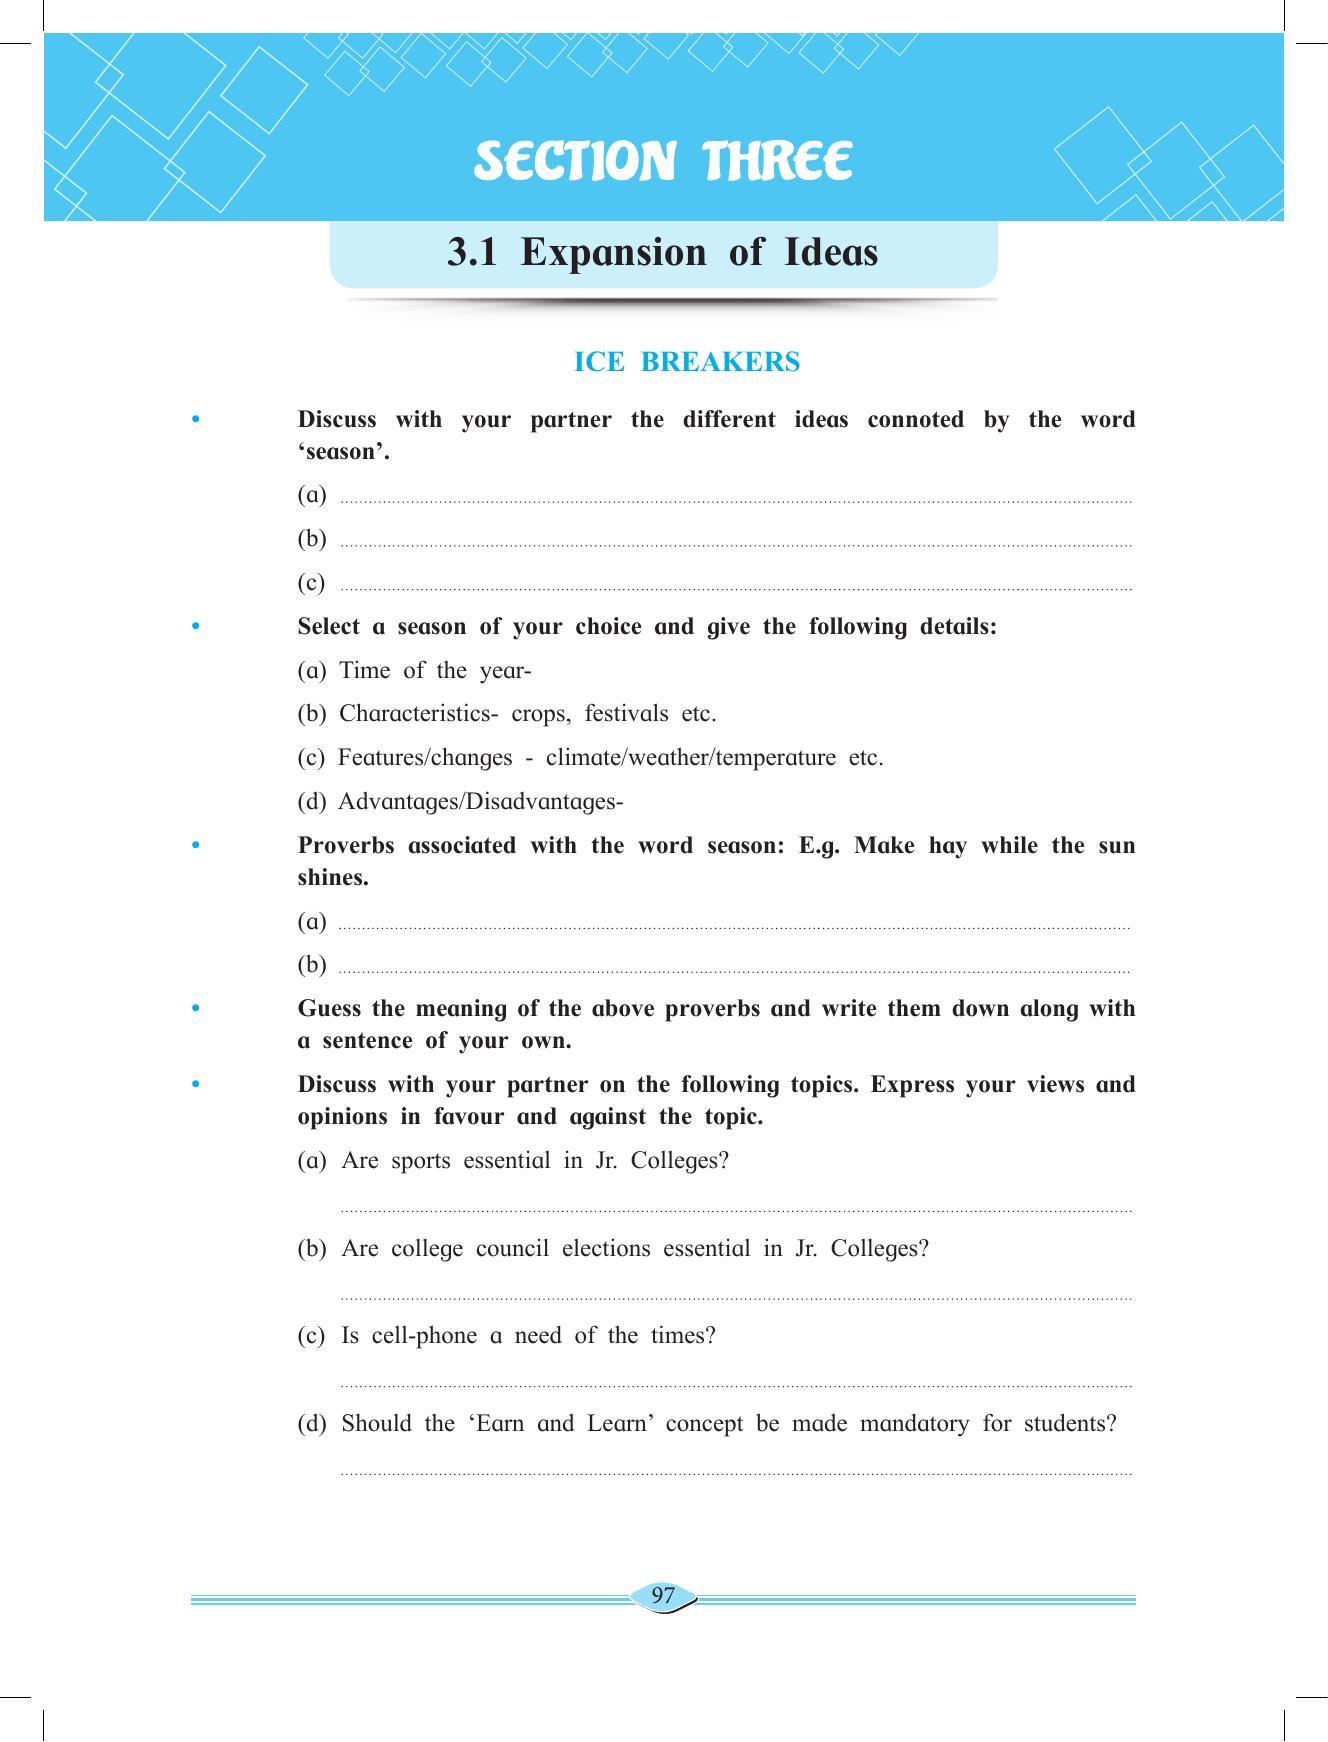 Maharashtra Board Class 11 English Textbook - Page 111